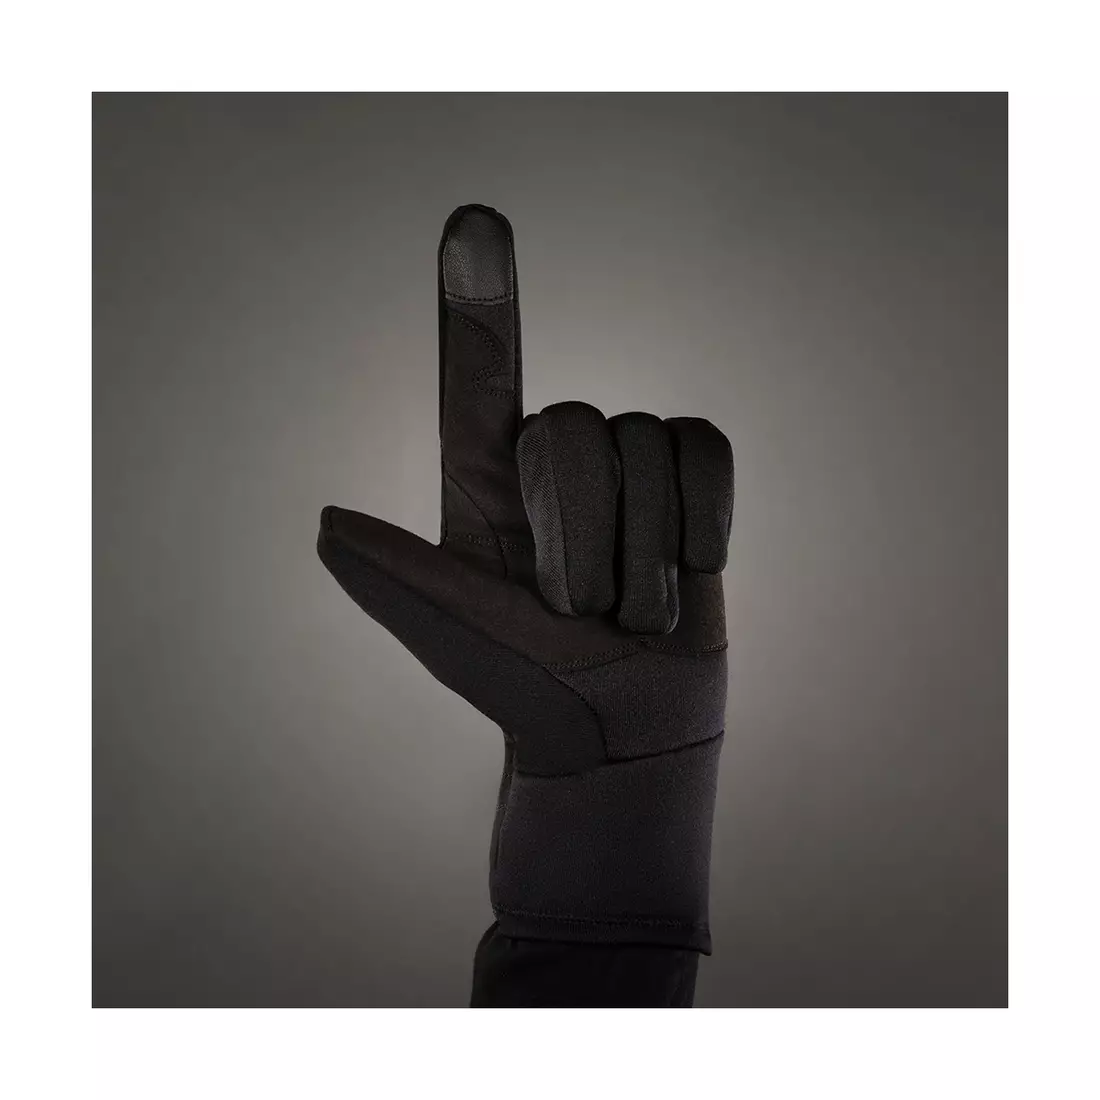 CHIBA POLARFLEECE TITAN winter gloves Black